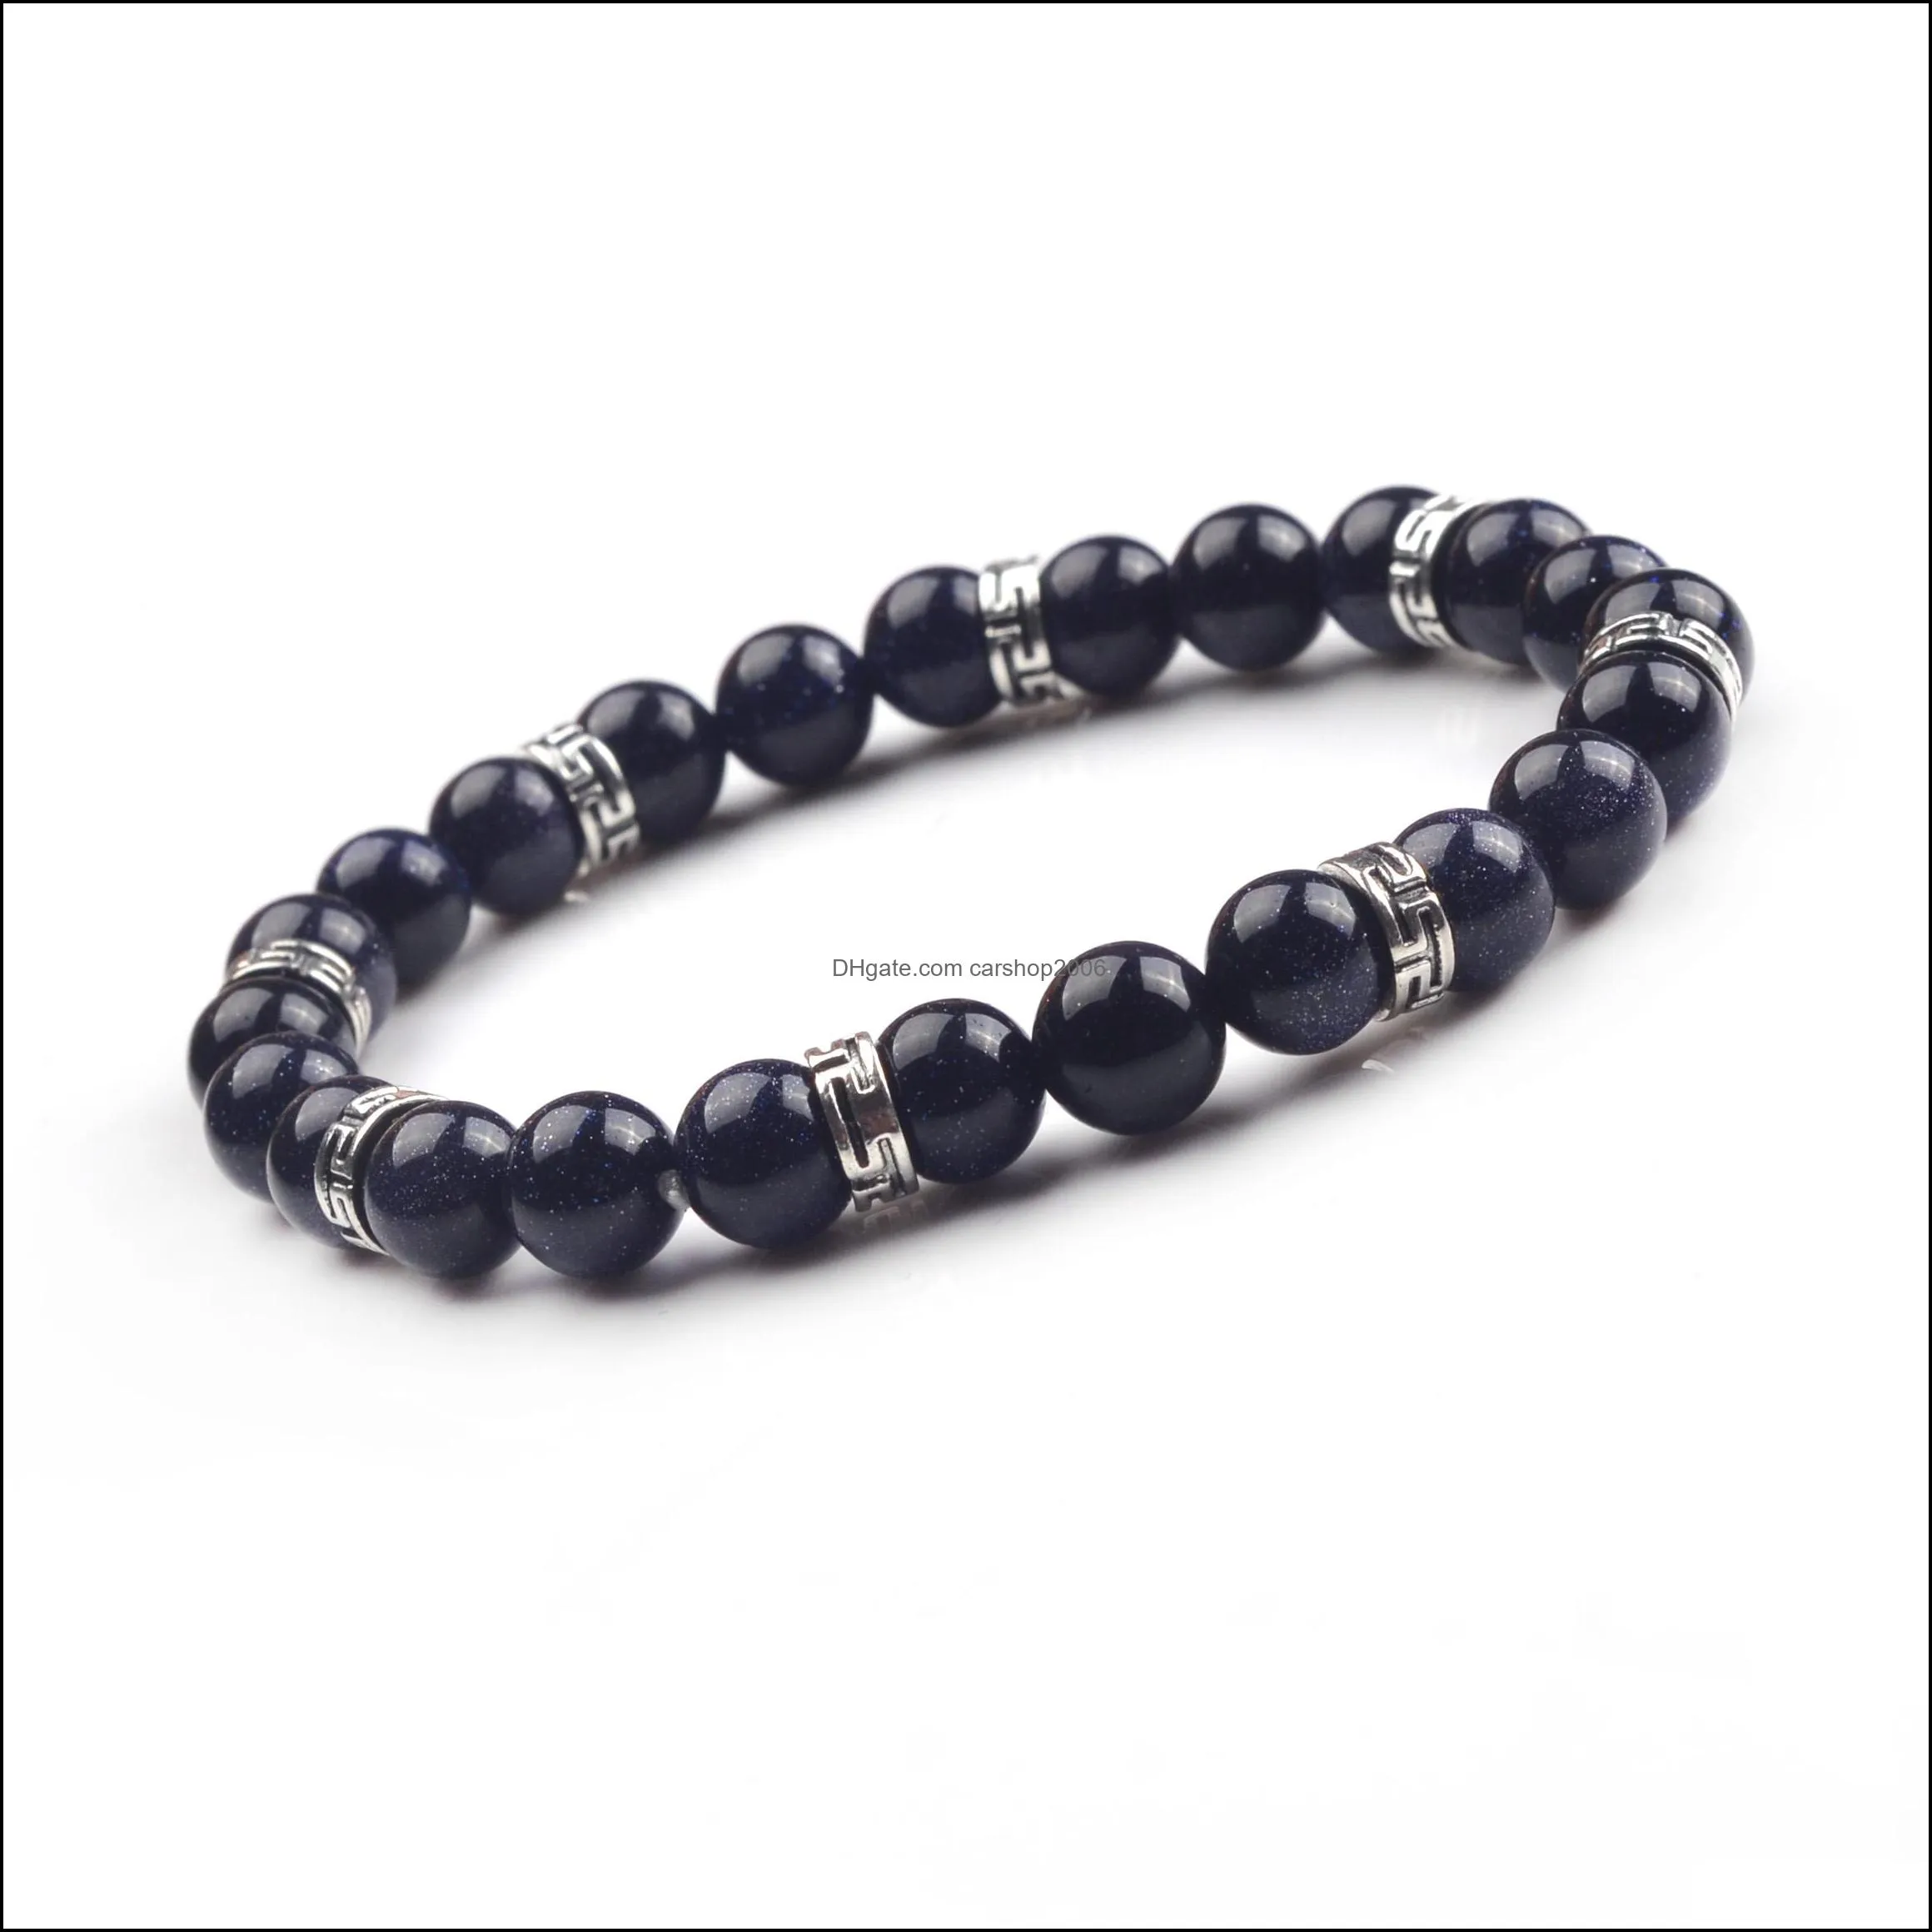 hot 2018 ladies men 8mm natural stone bracelet yoga beads bracelet bracelet jewelry gift